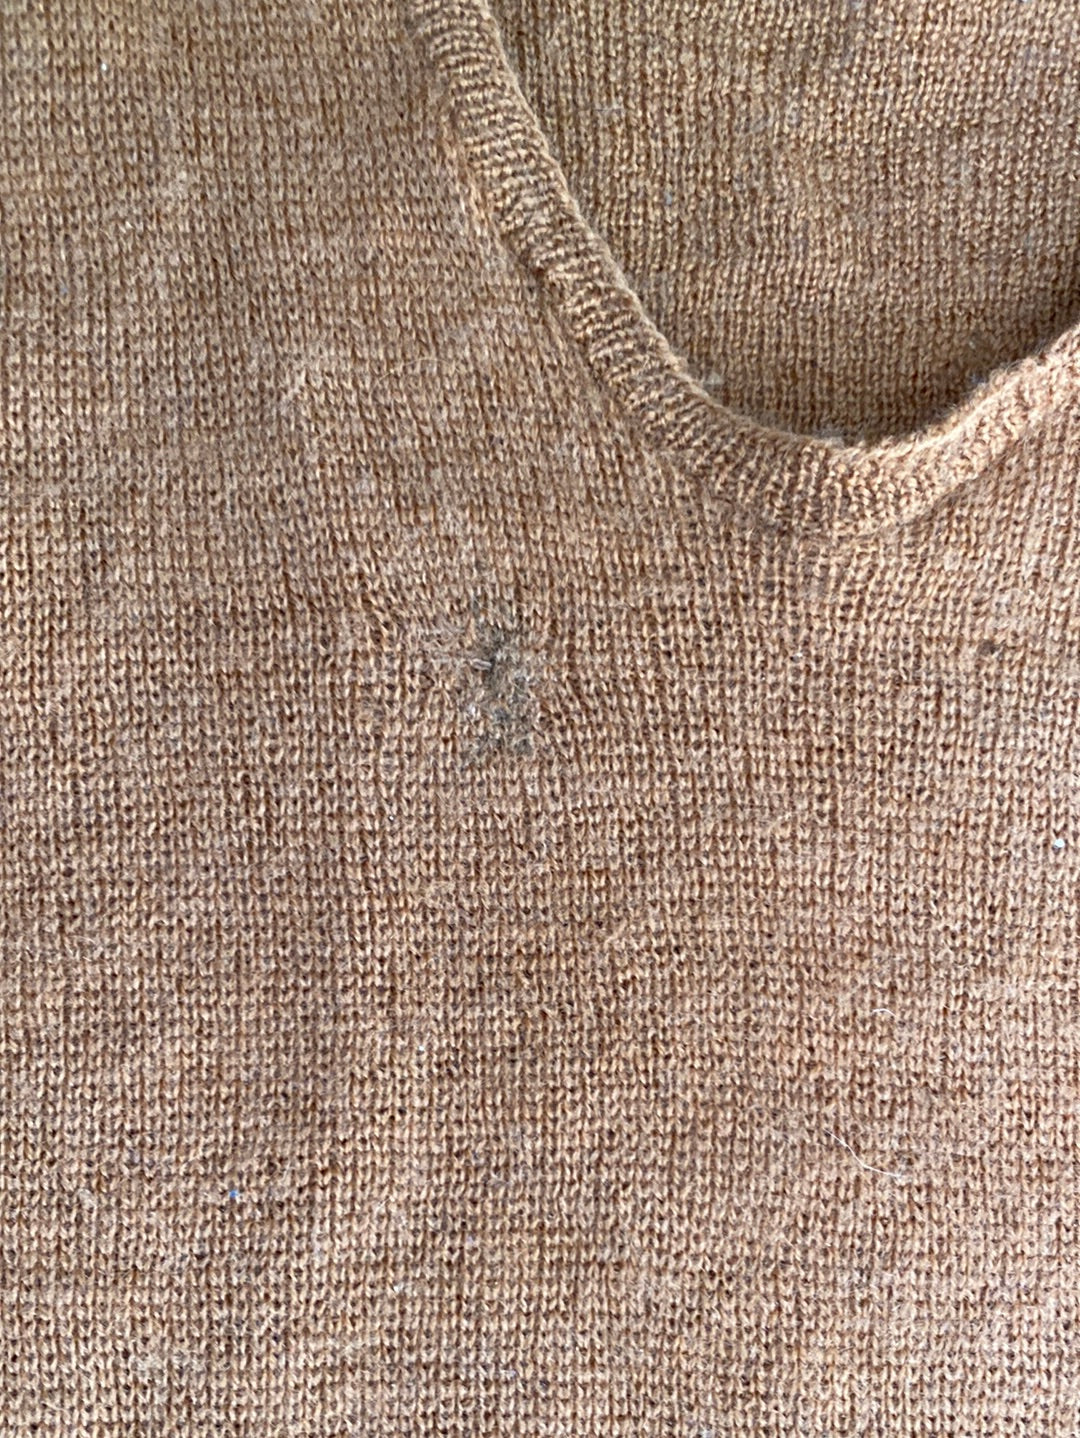 1940s Handmade Sweater Vest